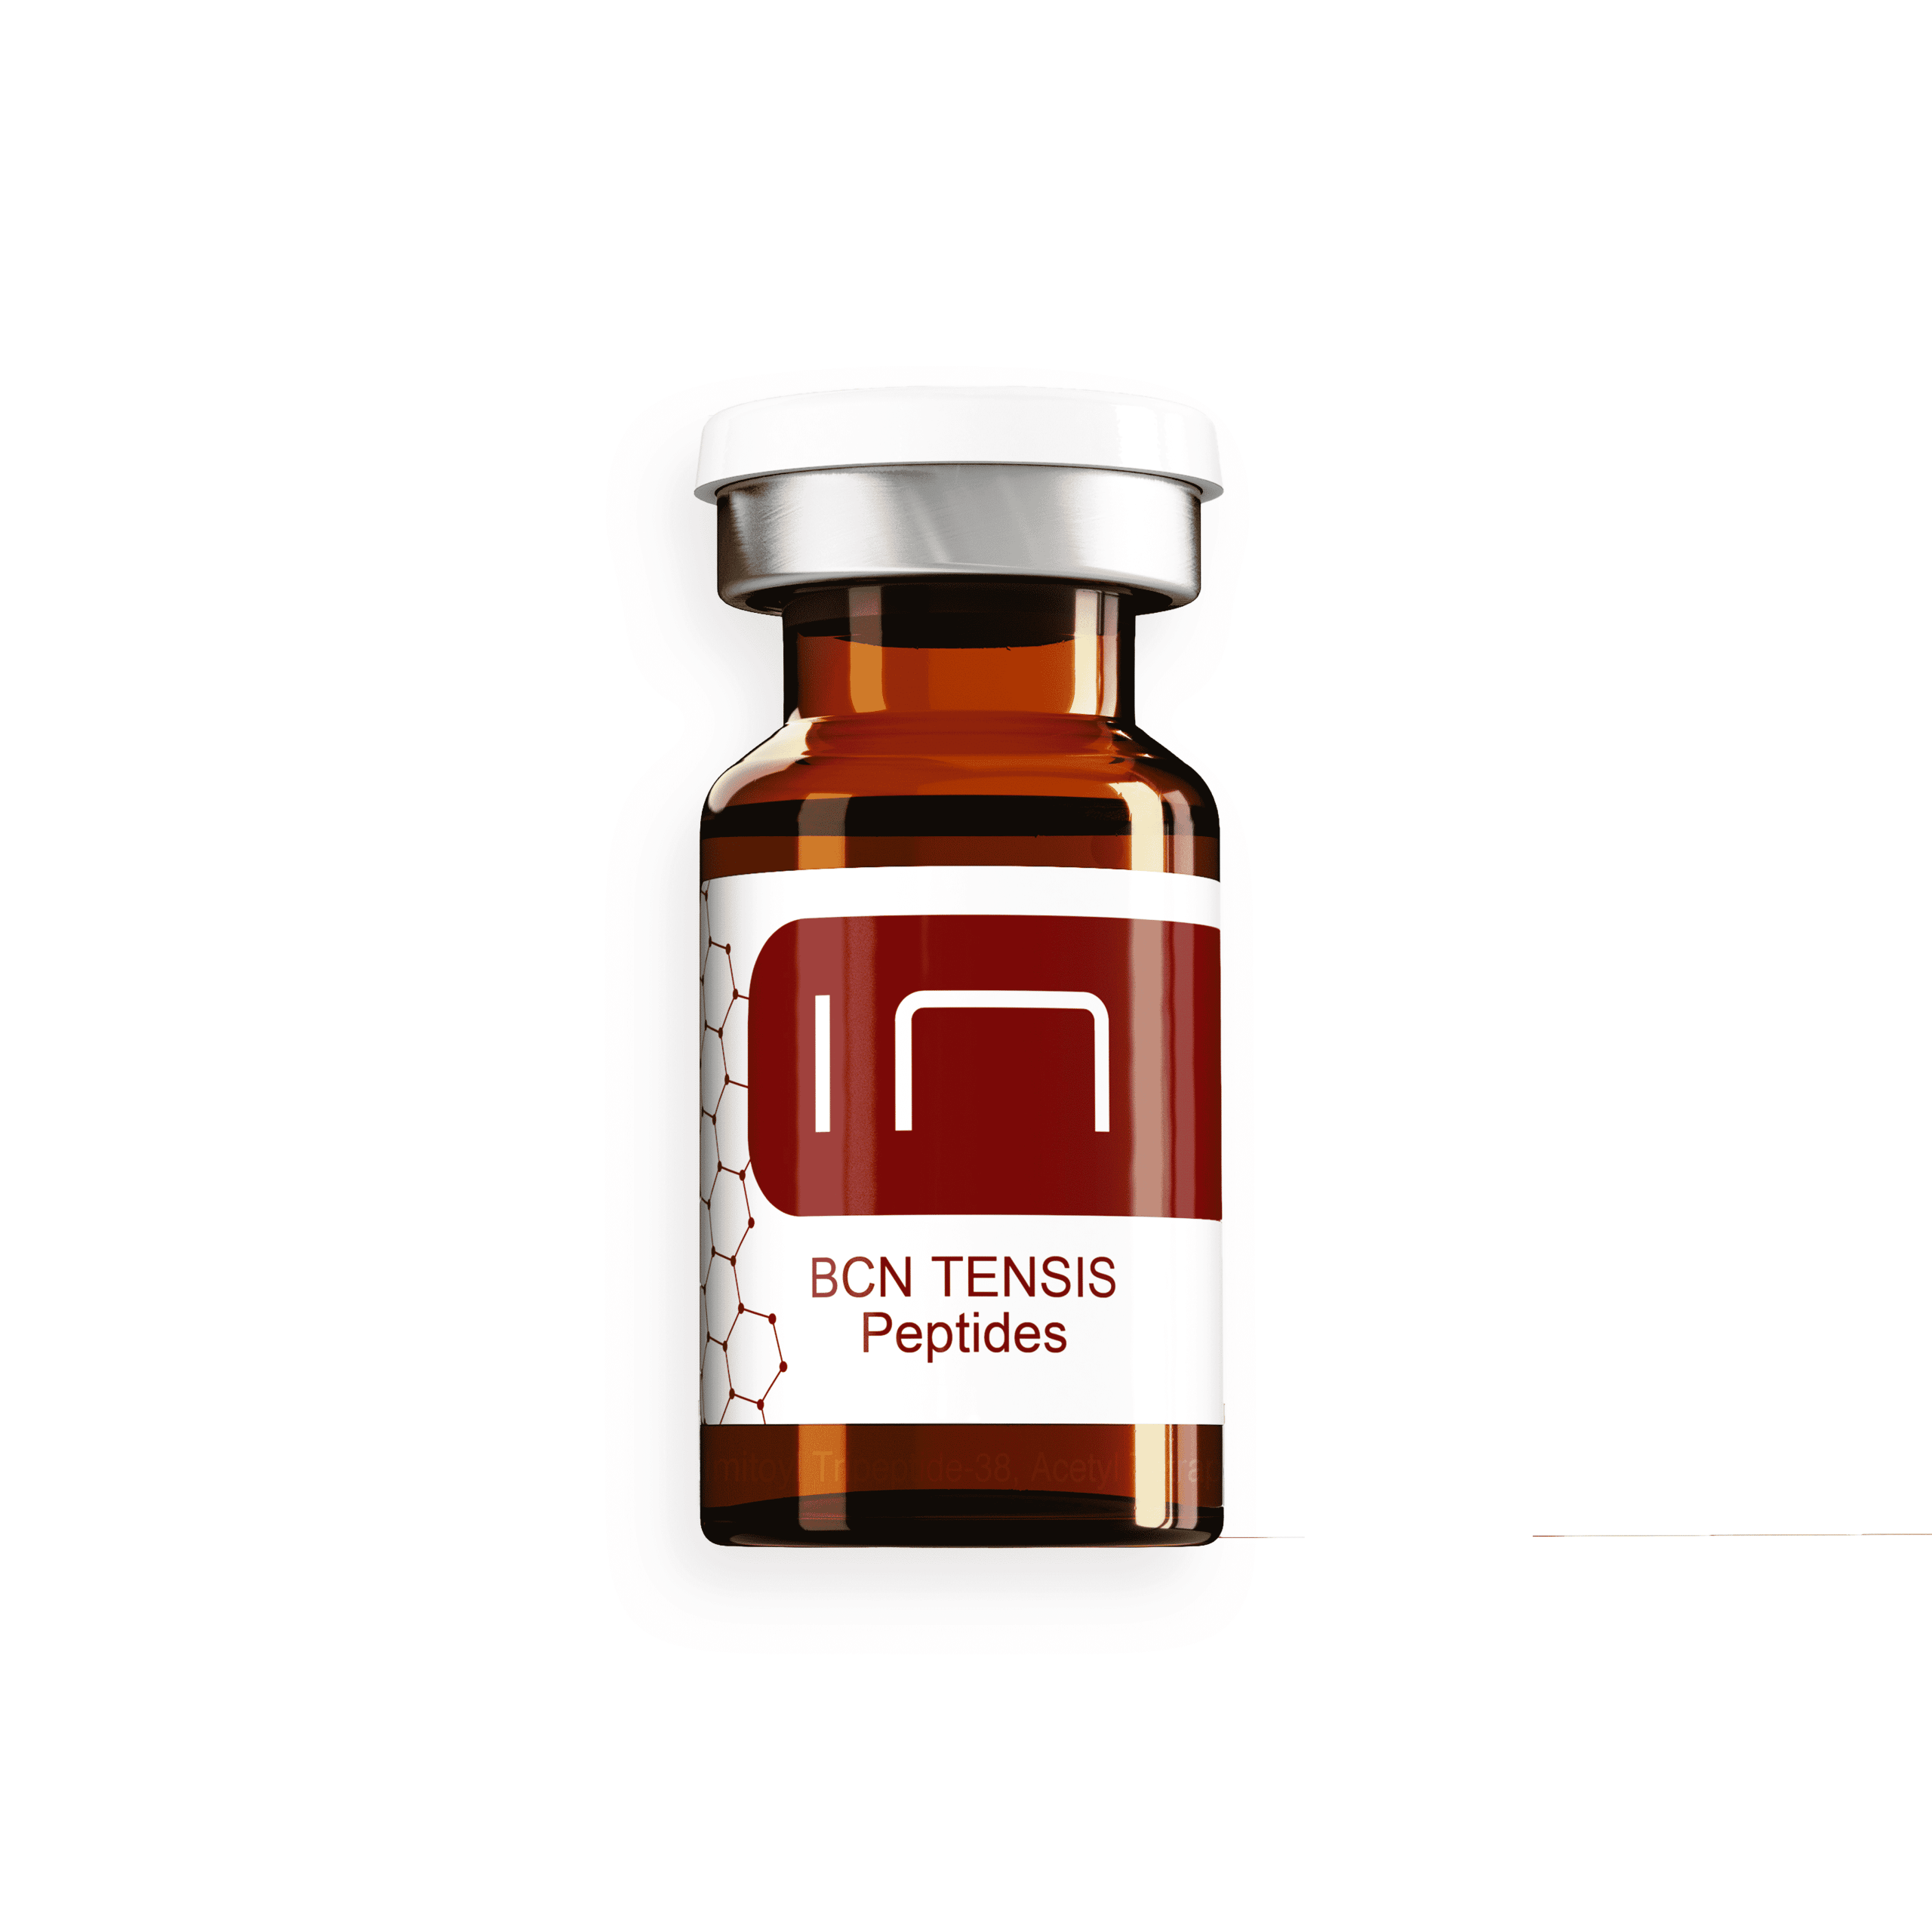 BCN TENSIS PEPTIDES Box of 5 vials of 5 ml